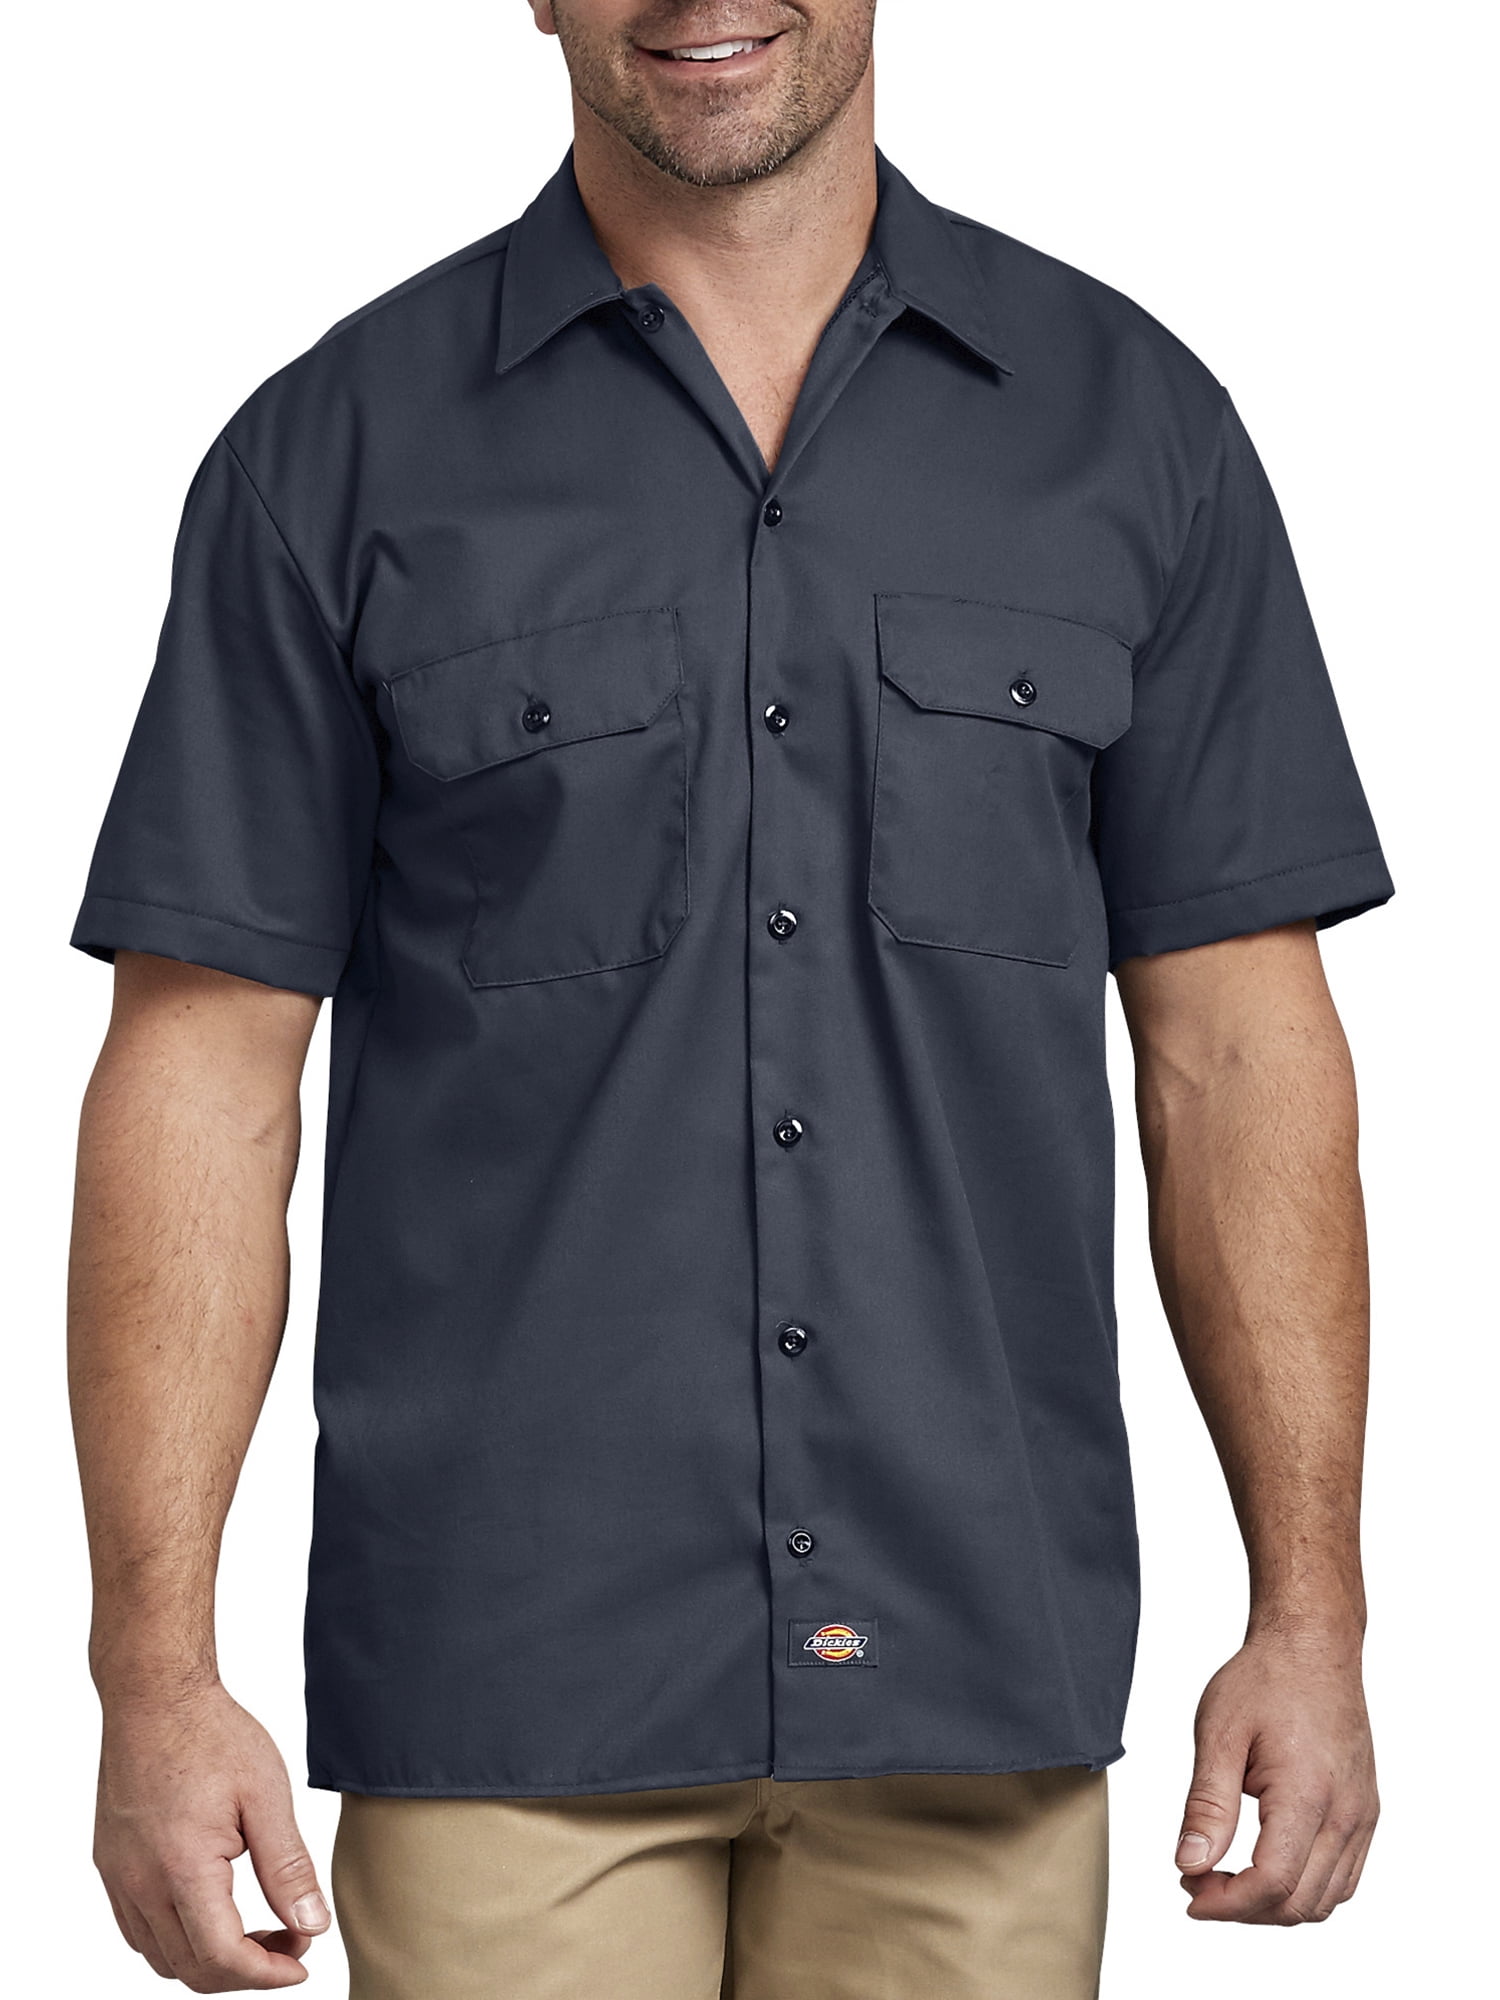 Button Down Shirt with Pockets hower Men Short Sleeve Casual Work Shirt